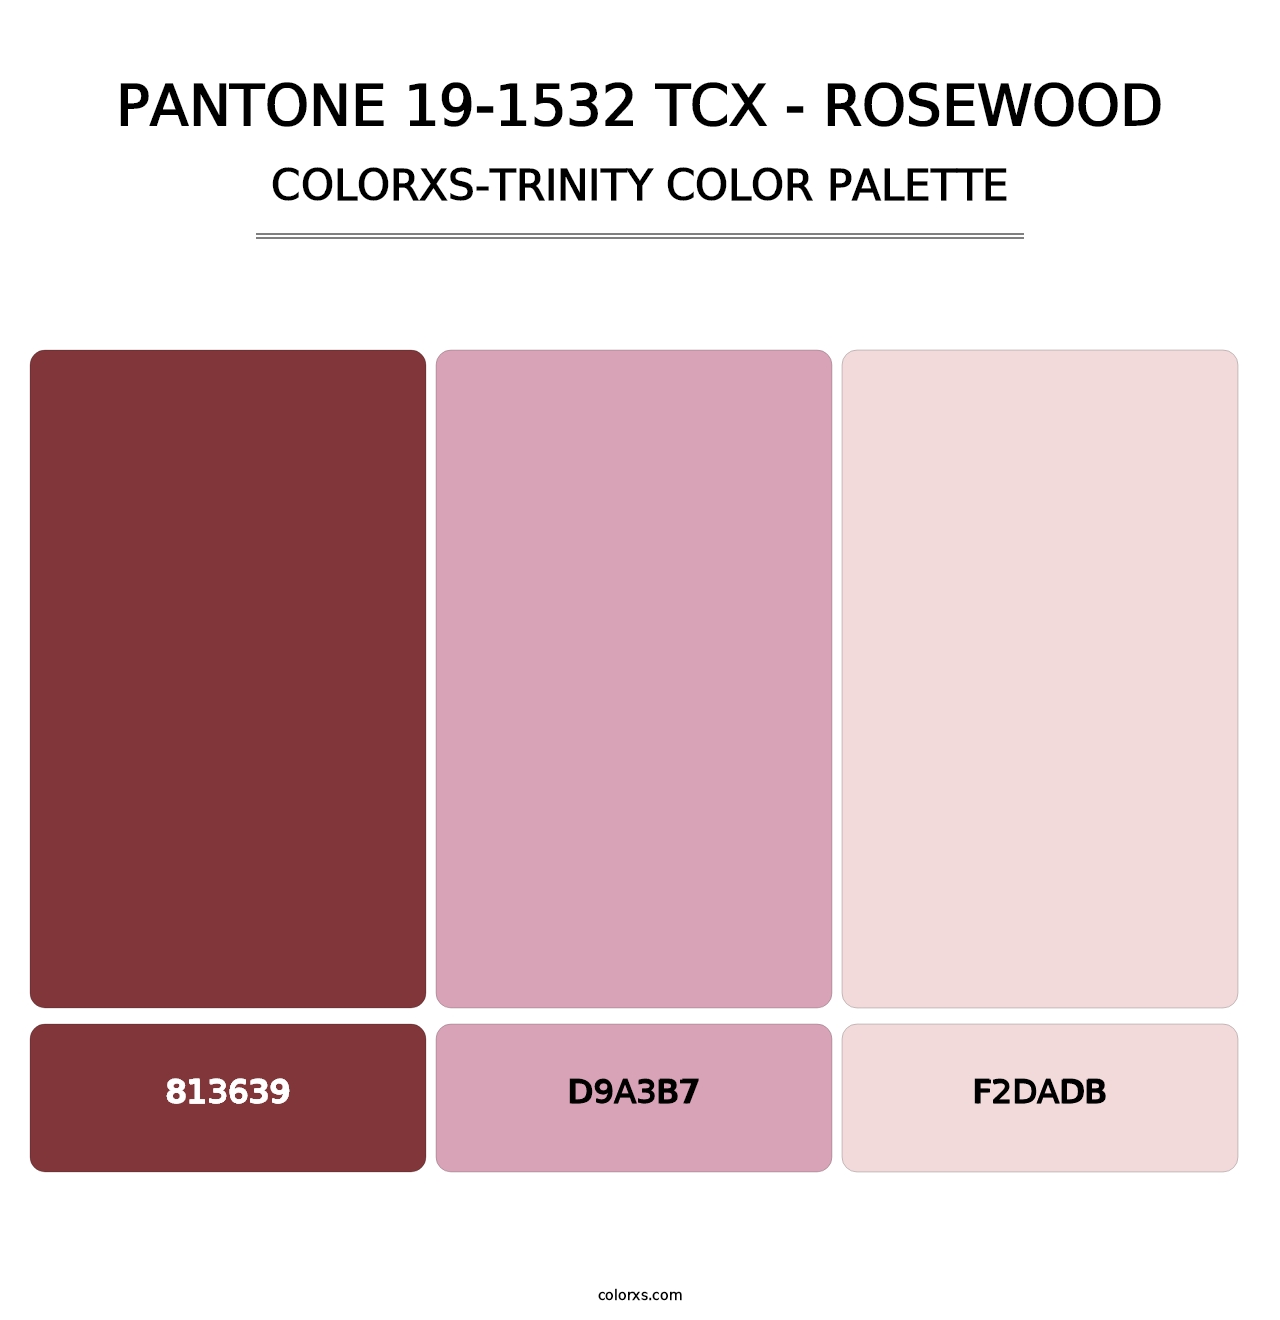 PANTONE 19-1532 TCX - Rosewood - Colorxs Trinity Palette